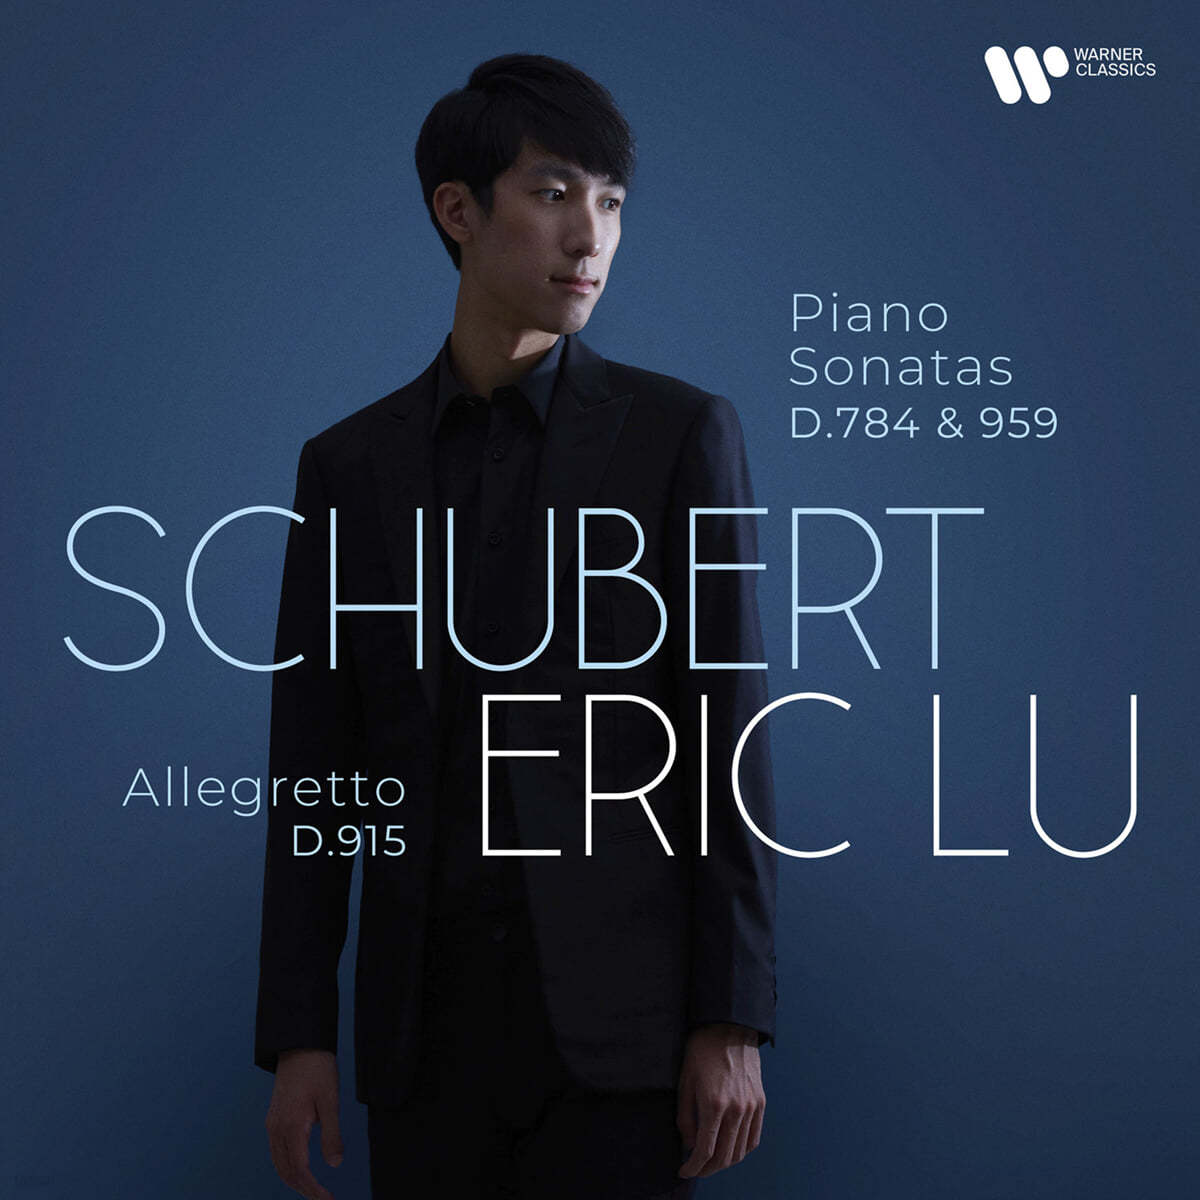 Eric Lu 슈베르트: 피아노 소나타 No. 14, 20 (Schubert: Piano Sonatas D.784 & D.959)